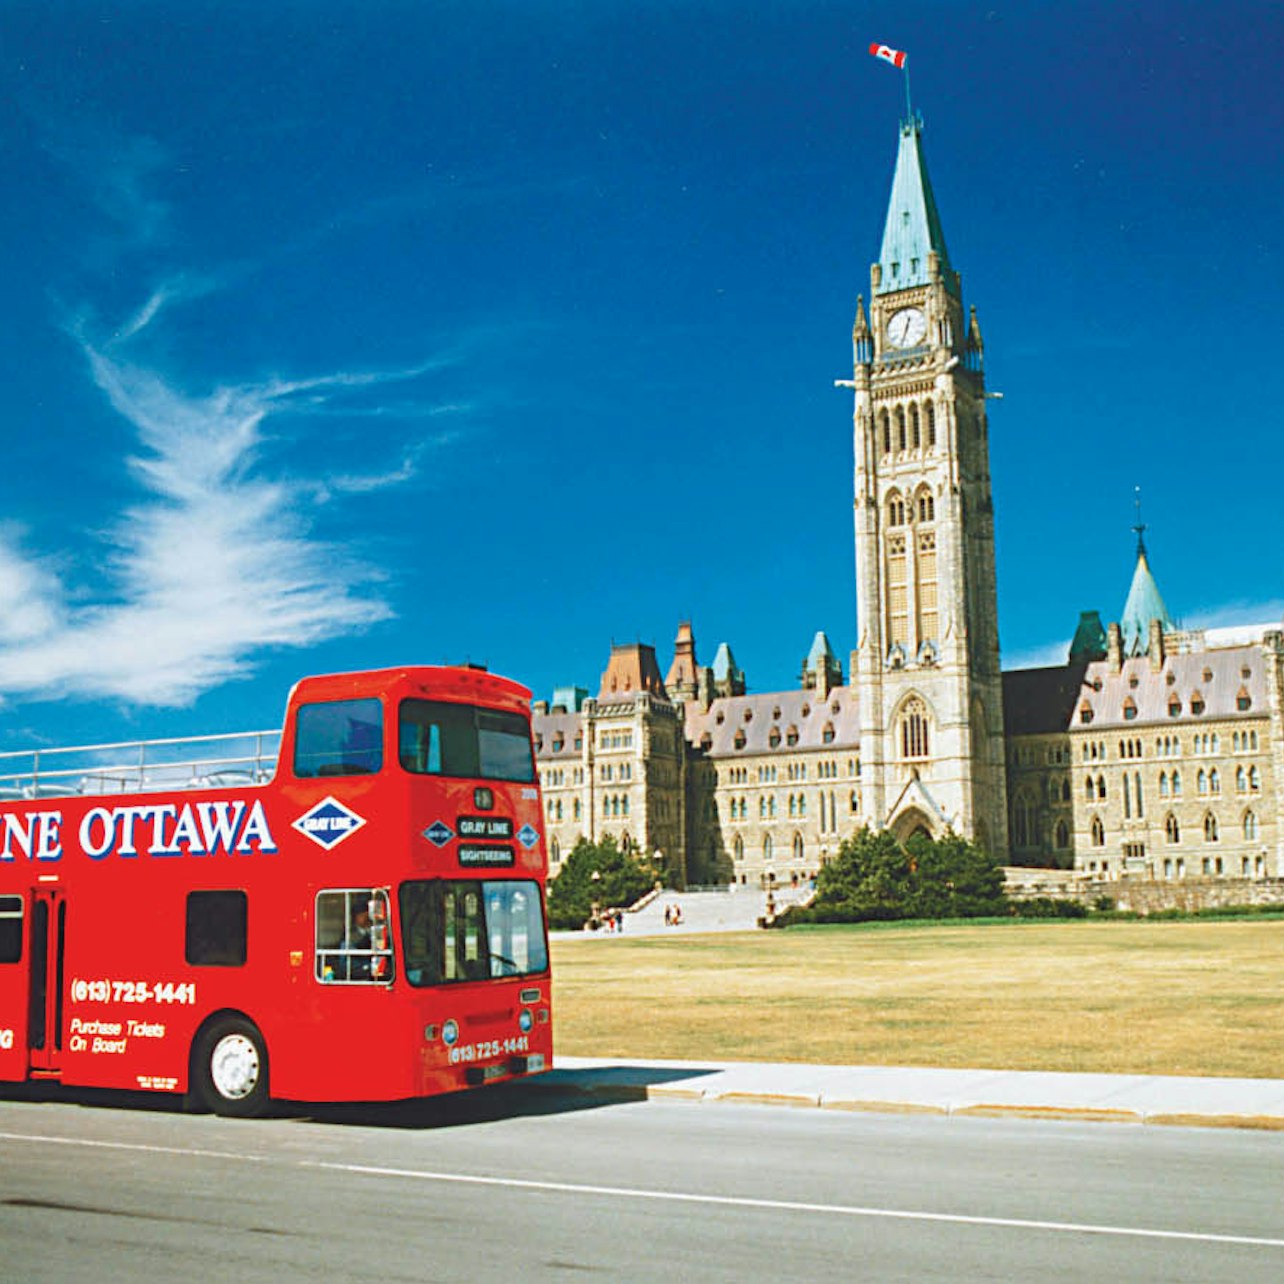 Ottawa City Tour: Hop-on Hop-off Bus - Accommodations in Ottawa